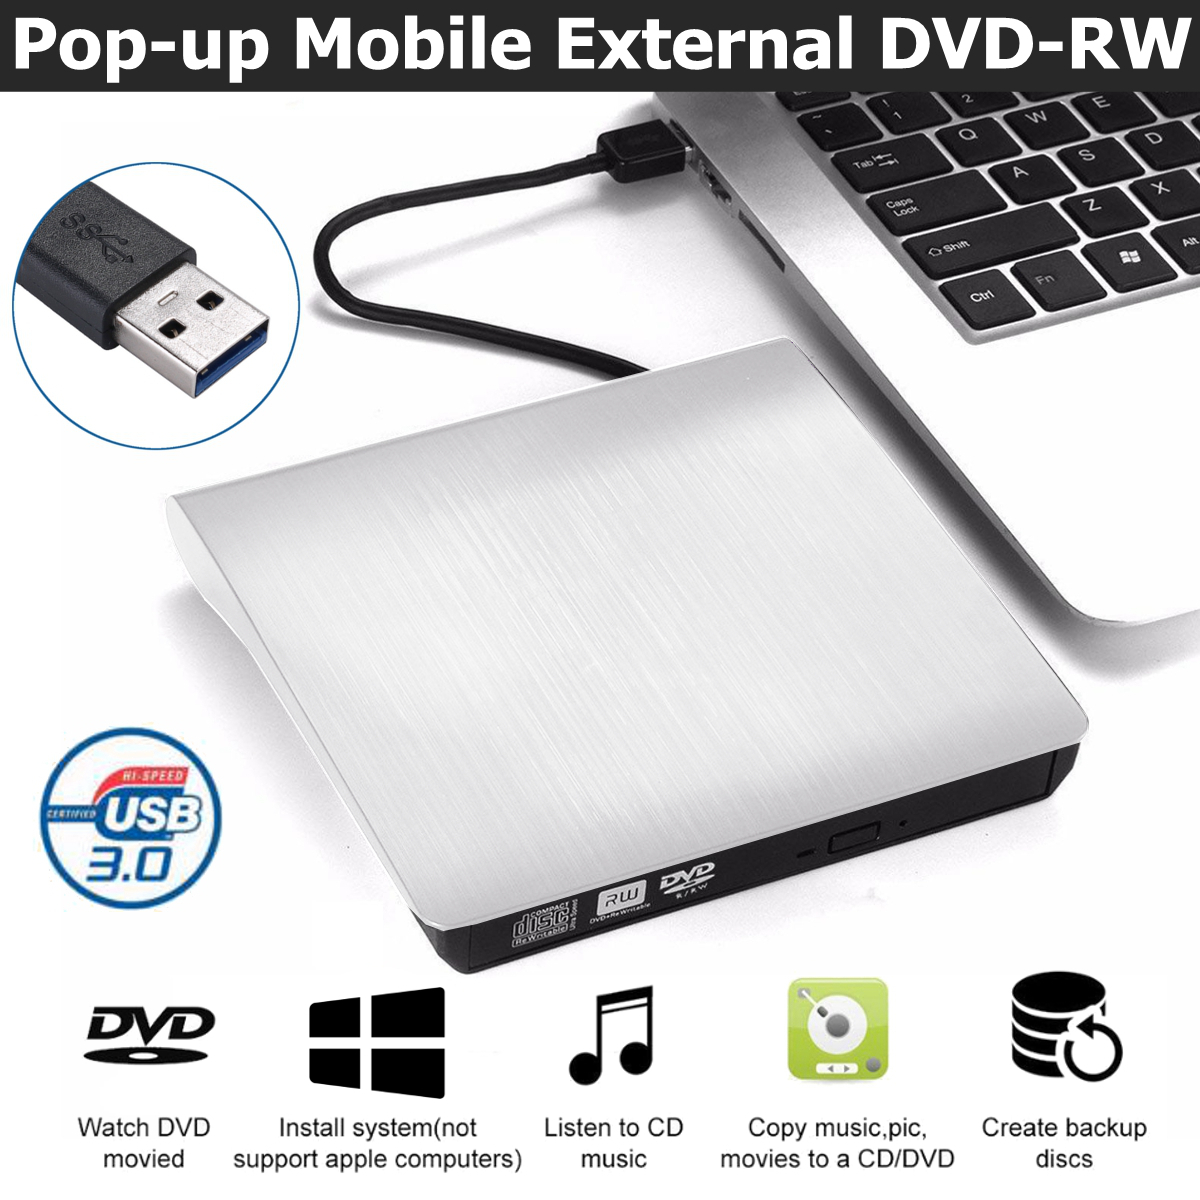 USB 3.0 Slim External DVD Optical Drive DVD-RW CD-RW Combo Drive Burner Reader Player 21